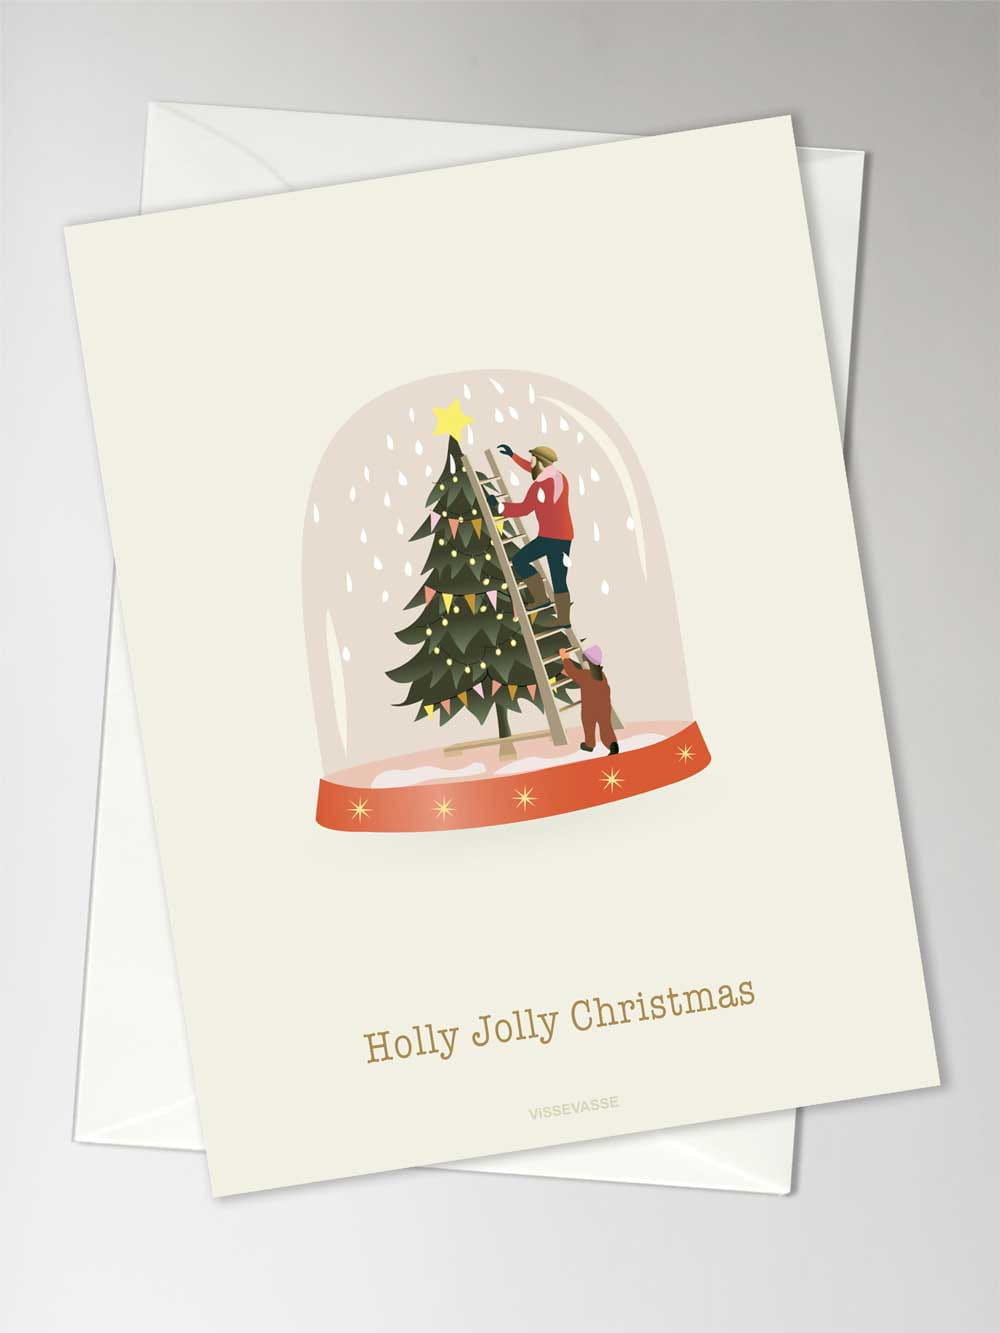 Vissevasse Holly Jolly Christmas Map, A6